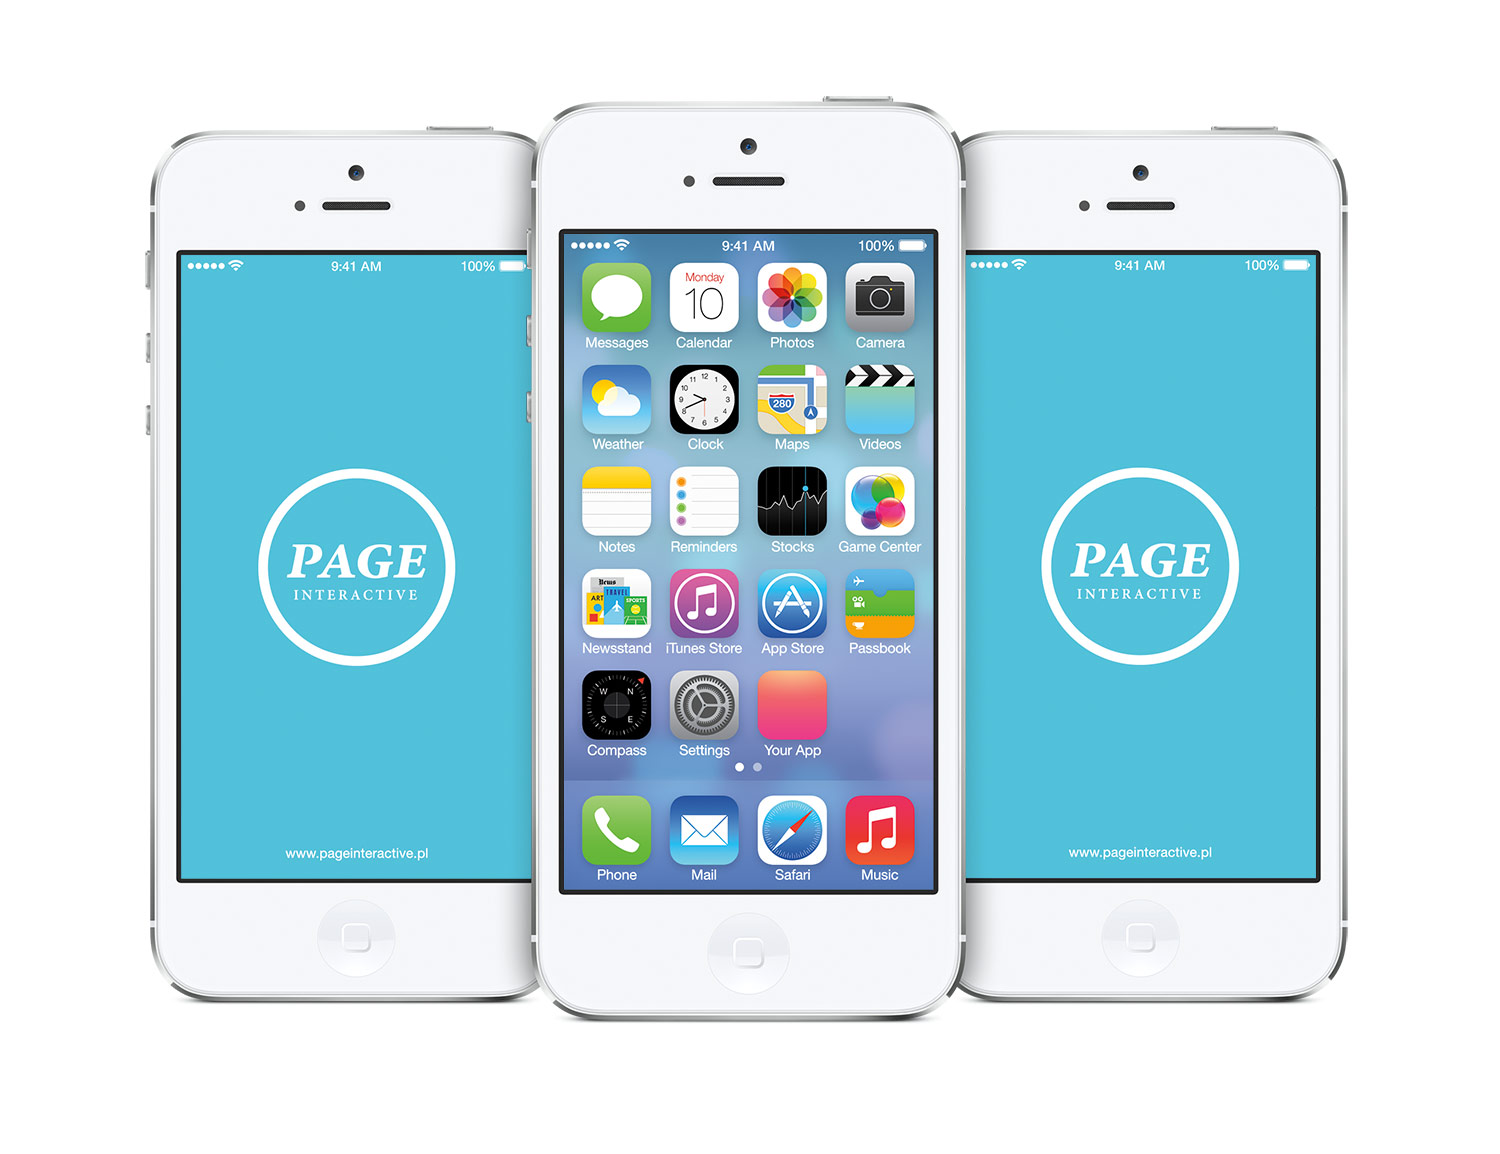 Download iPhone iOS 7 Home Screen - Free PSD Mockup | Free Mockup